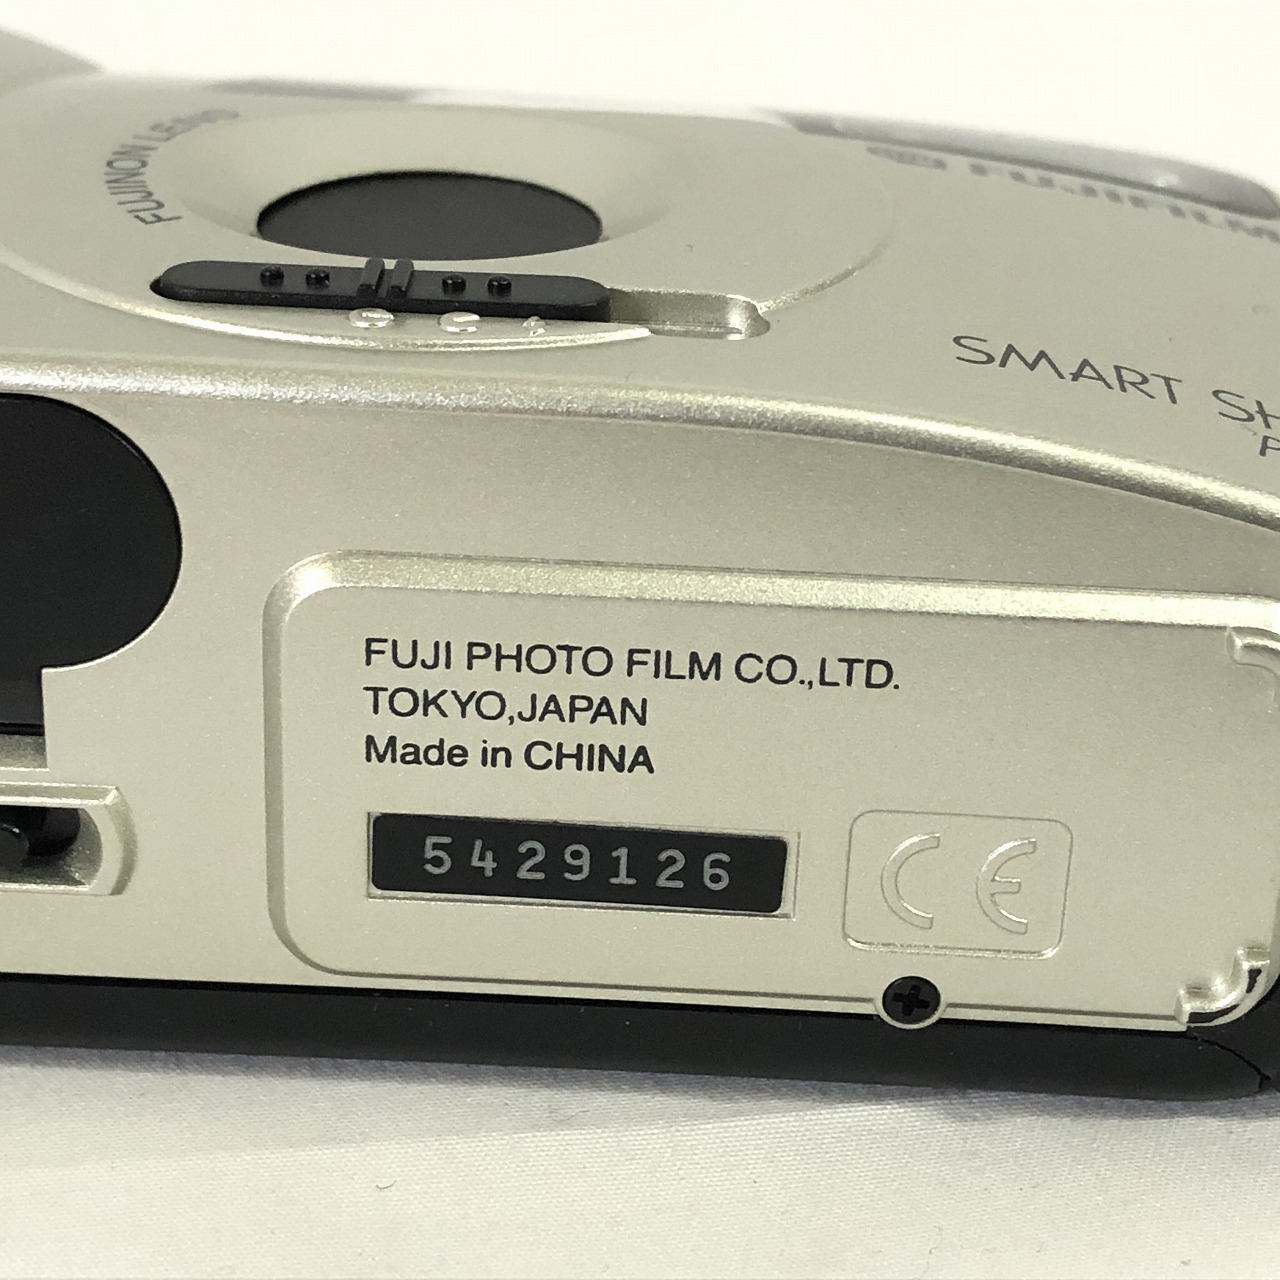  new goods FUJIFILM Fuji film 10 day guarantee Smart Schott plus ash X silver F3